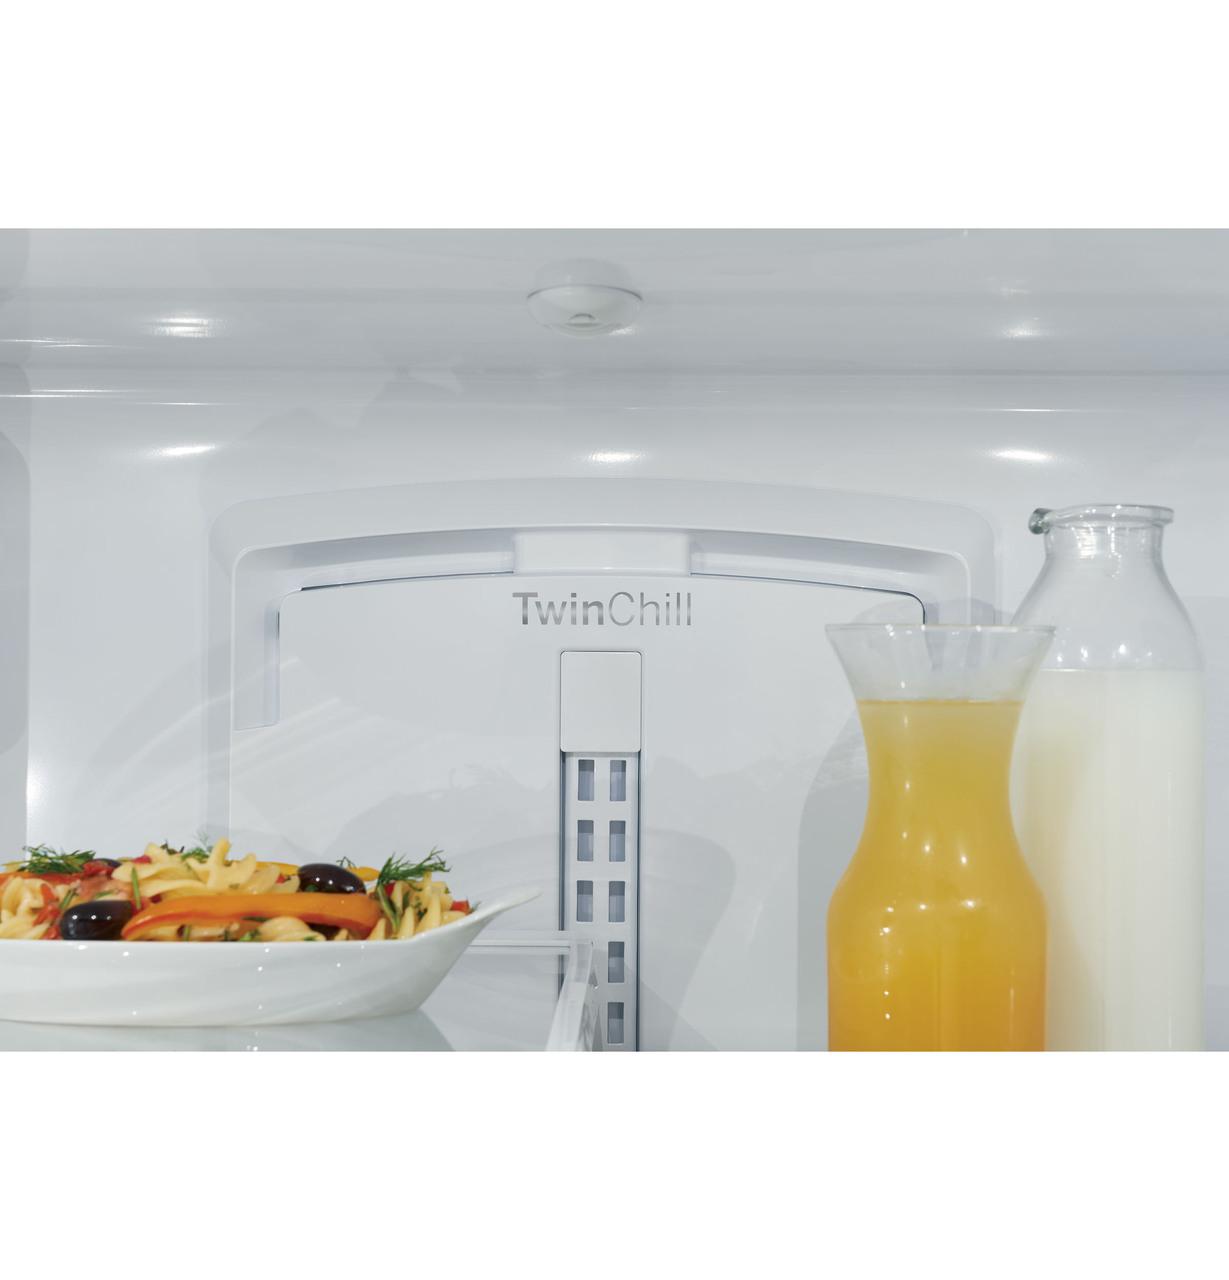 Cafe Caf(eback)™ ENERGY STAR® 27.7 Cu. Ft. Smart French-Door Refrigerator with Hot Water Dispenser